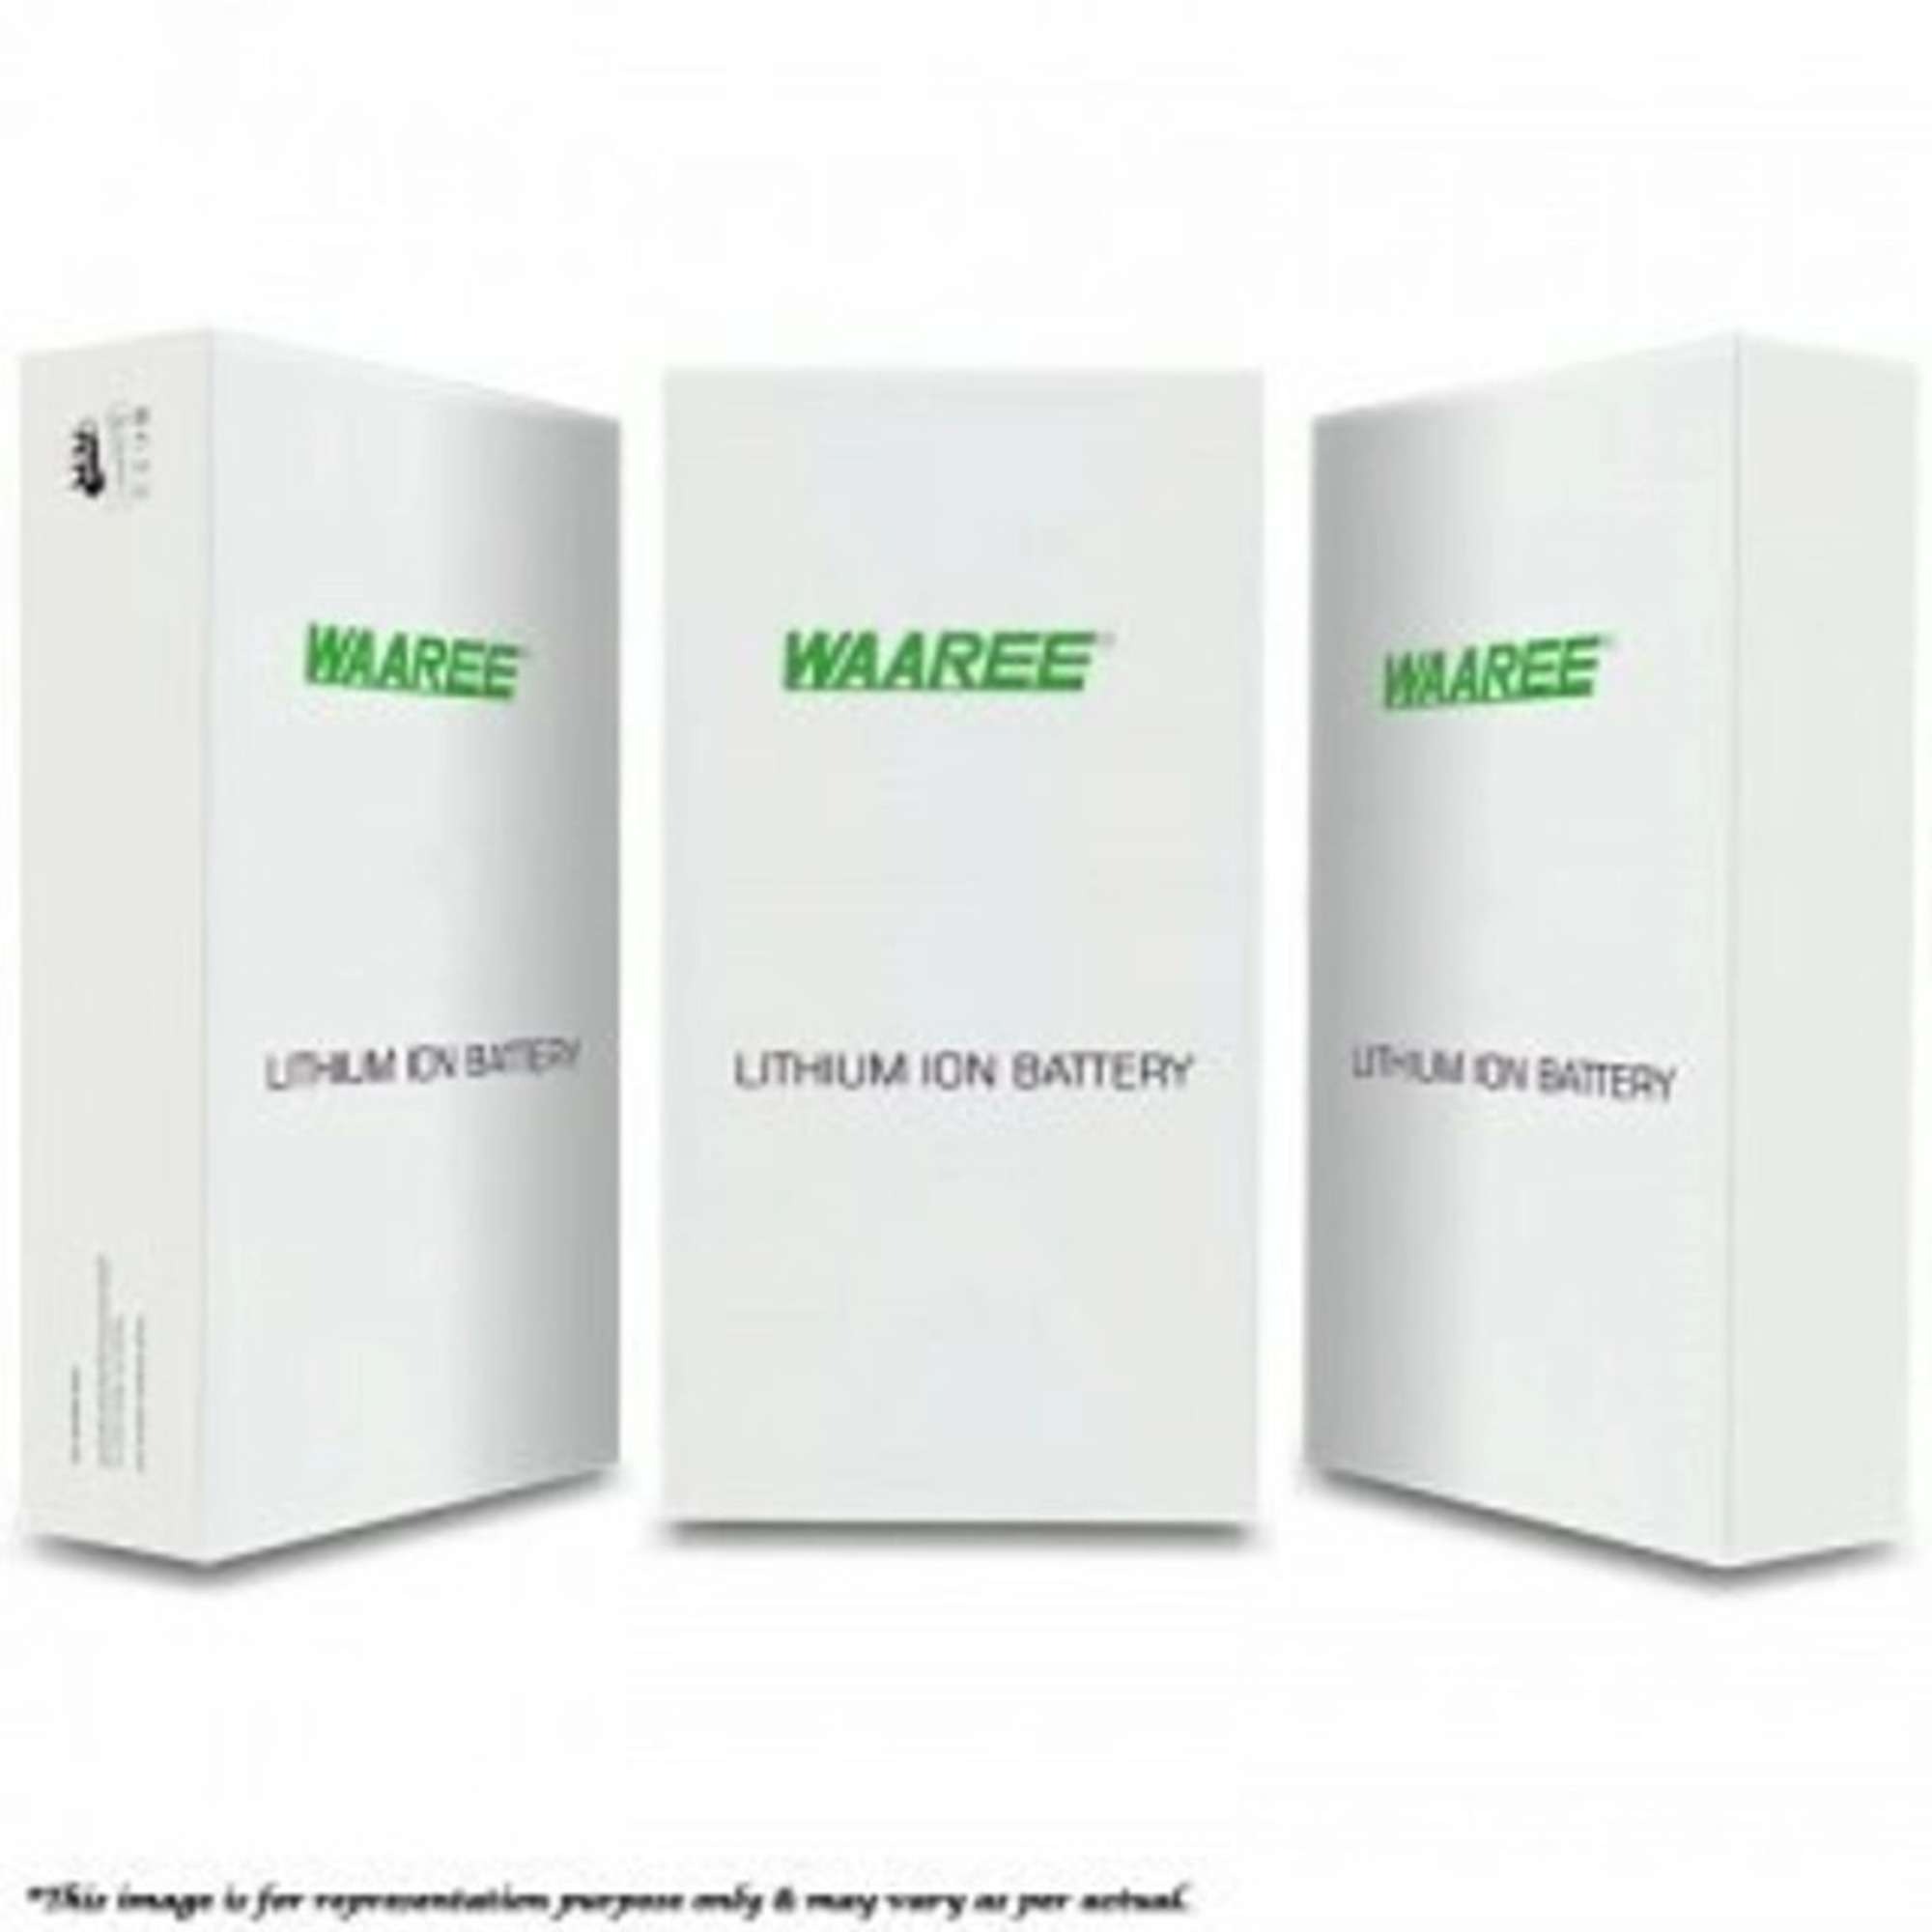 Waaree 48V/240 Ah (11520 Wh) Li-Ion LFP Battery Packs